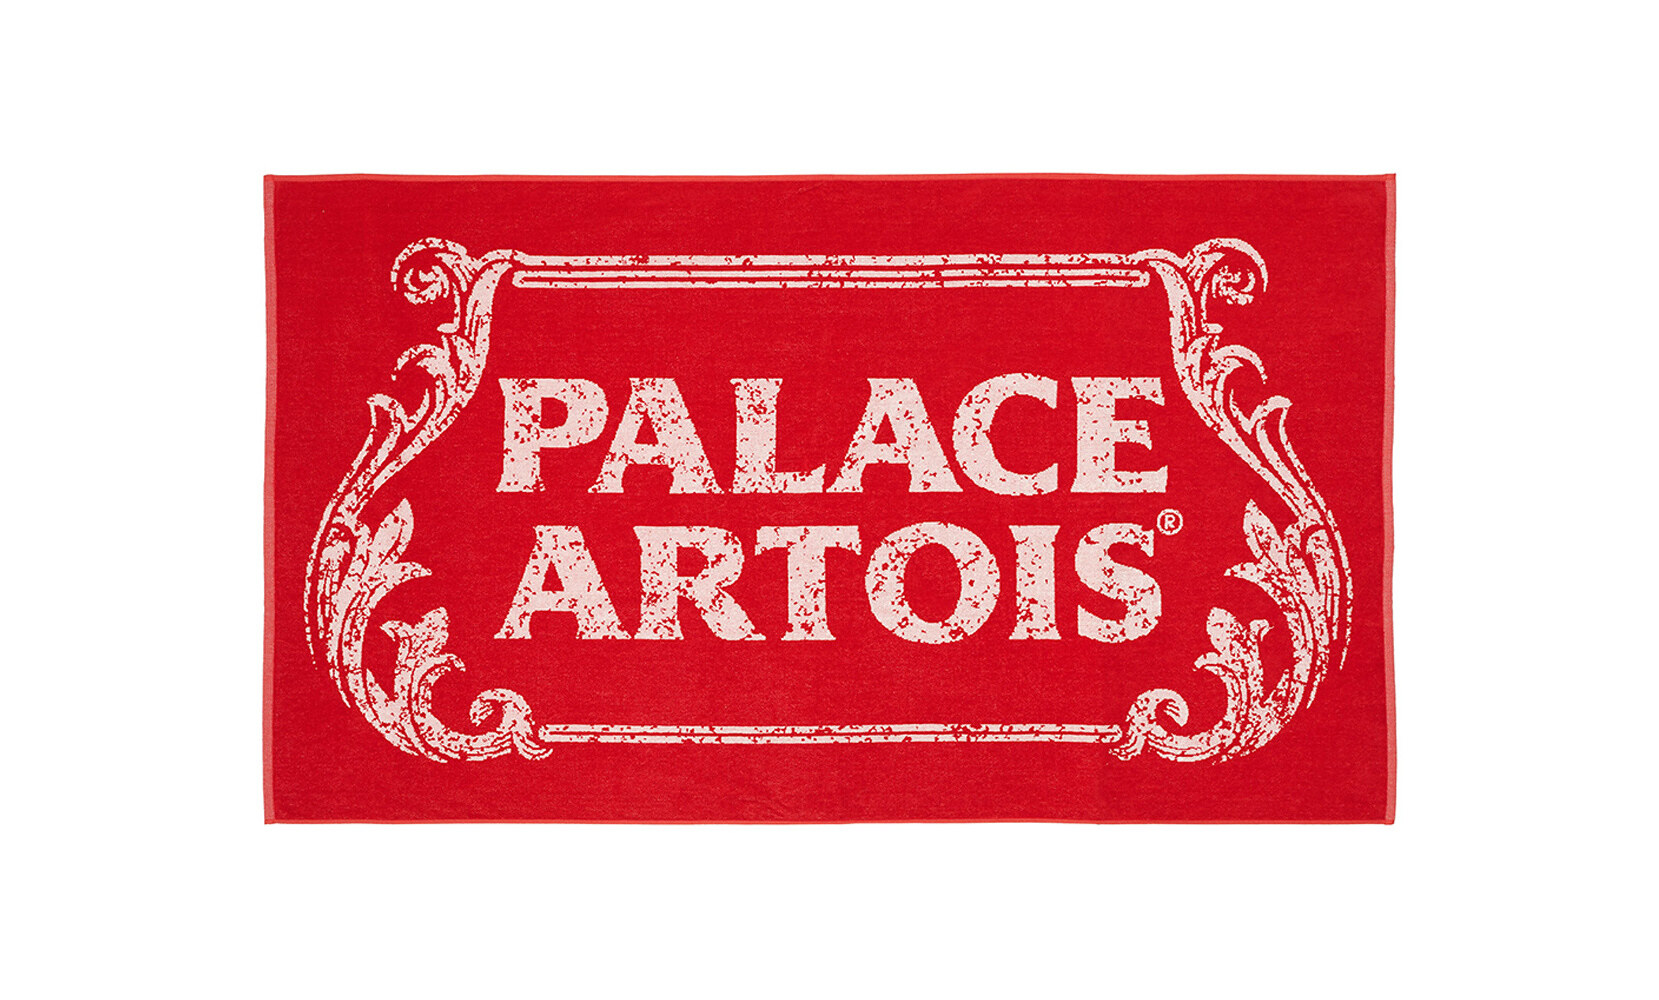 Palace Skateboard x Stella Artois